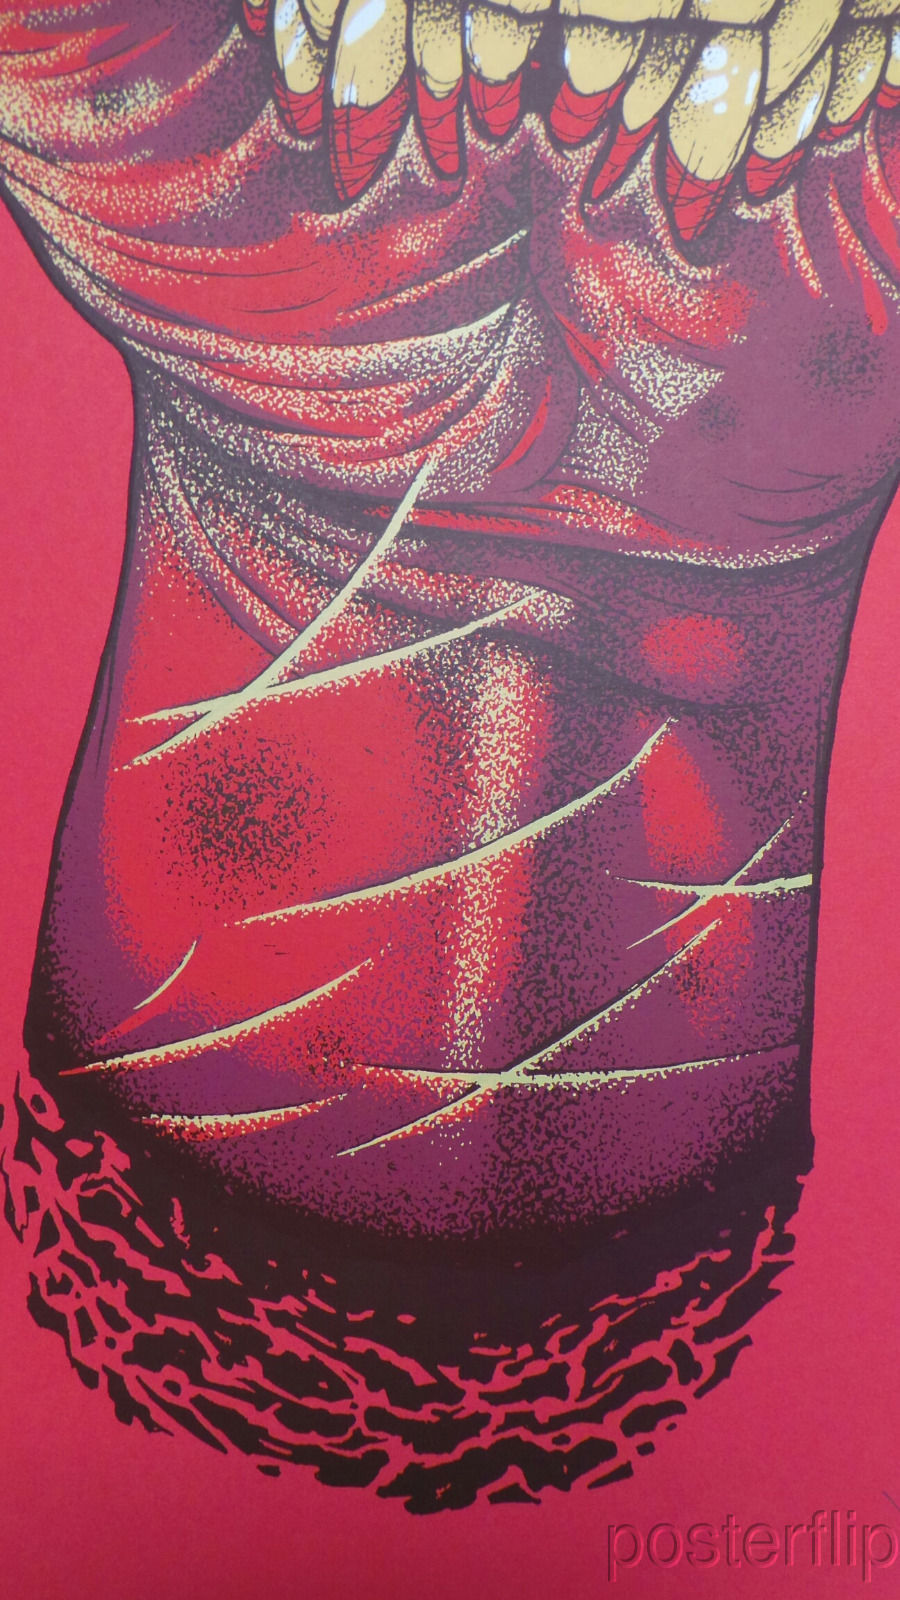 John Baizley Hand2Mouth Screenprint Poster Red Hot Edition Baroness